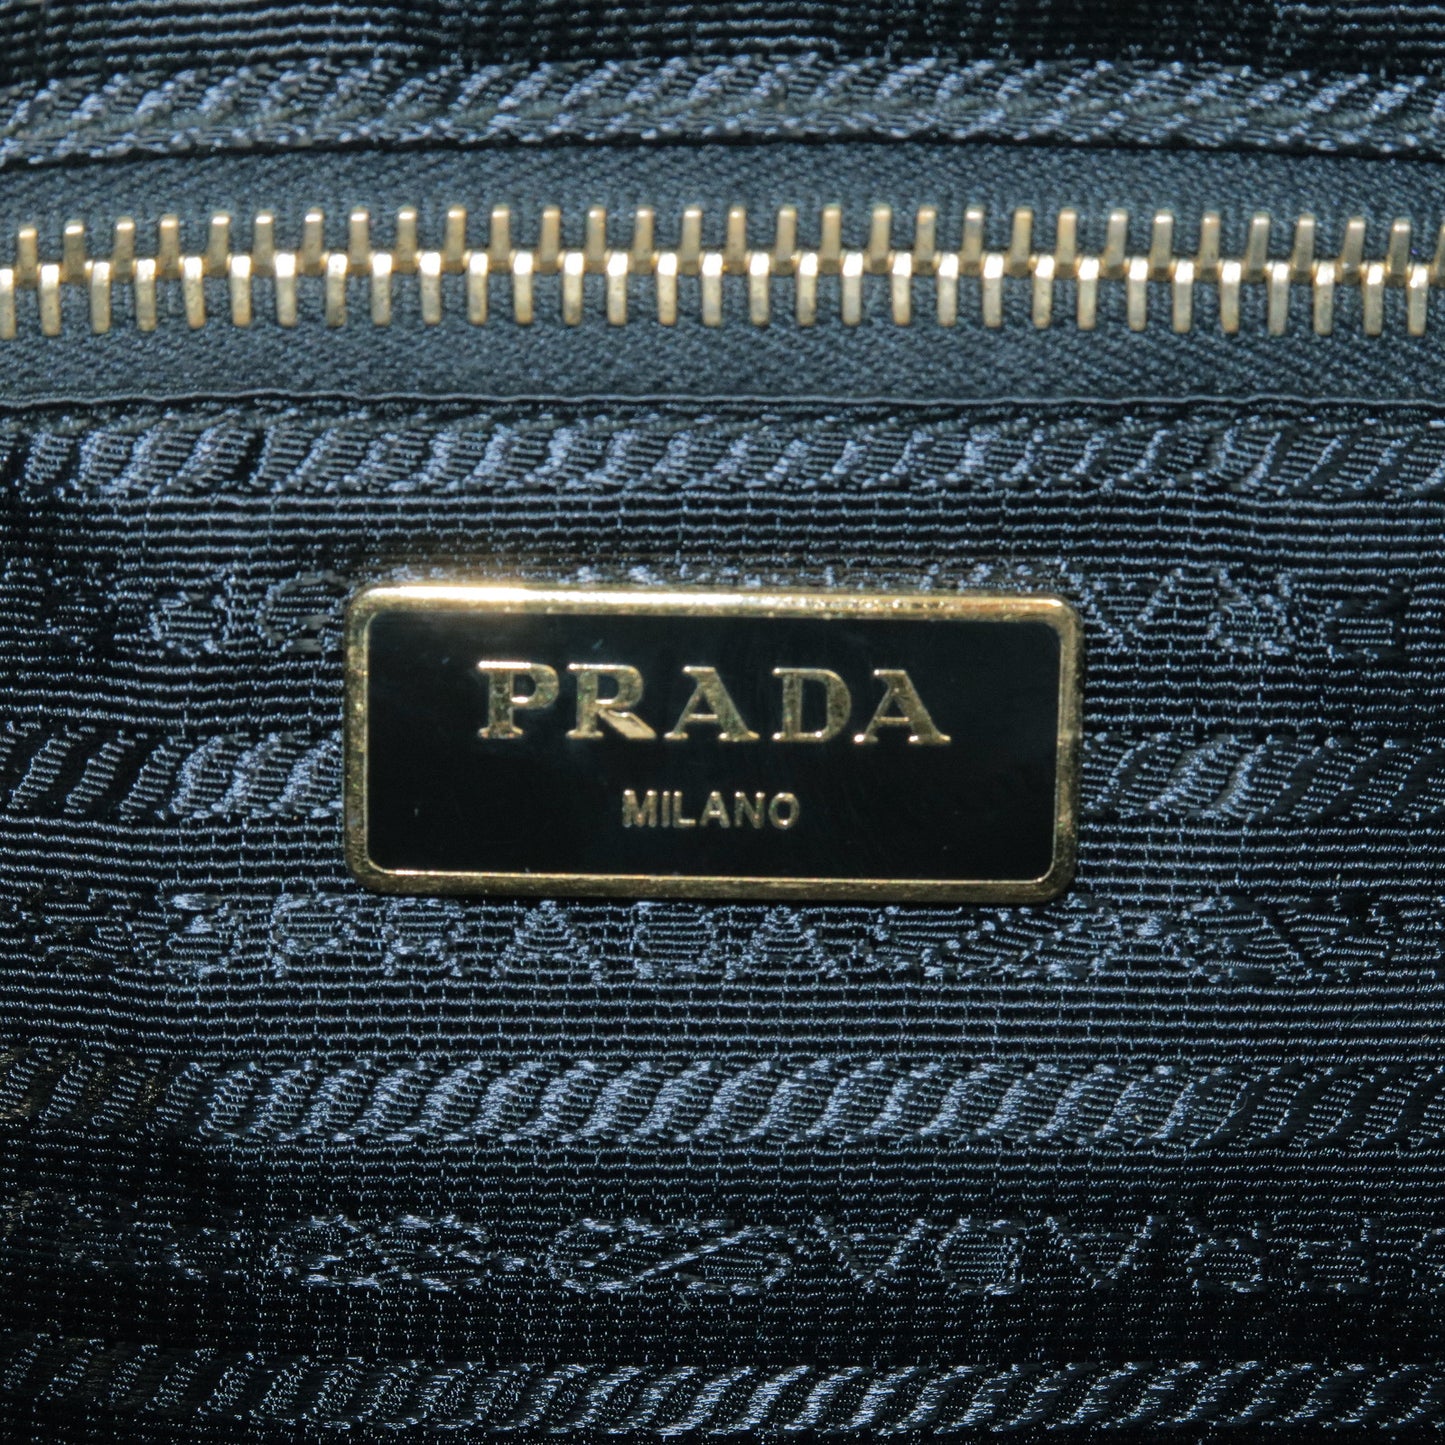 PRADA Nylon Leather Shoulder Bag Purse NERO Black BT0706